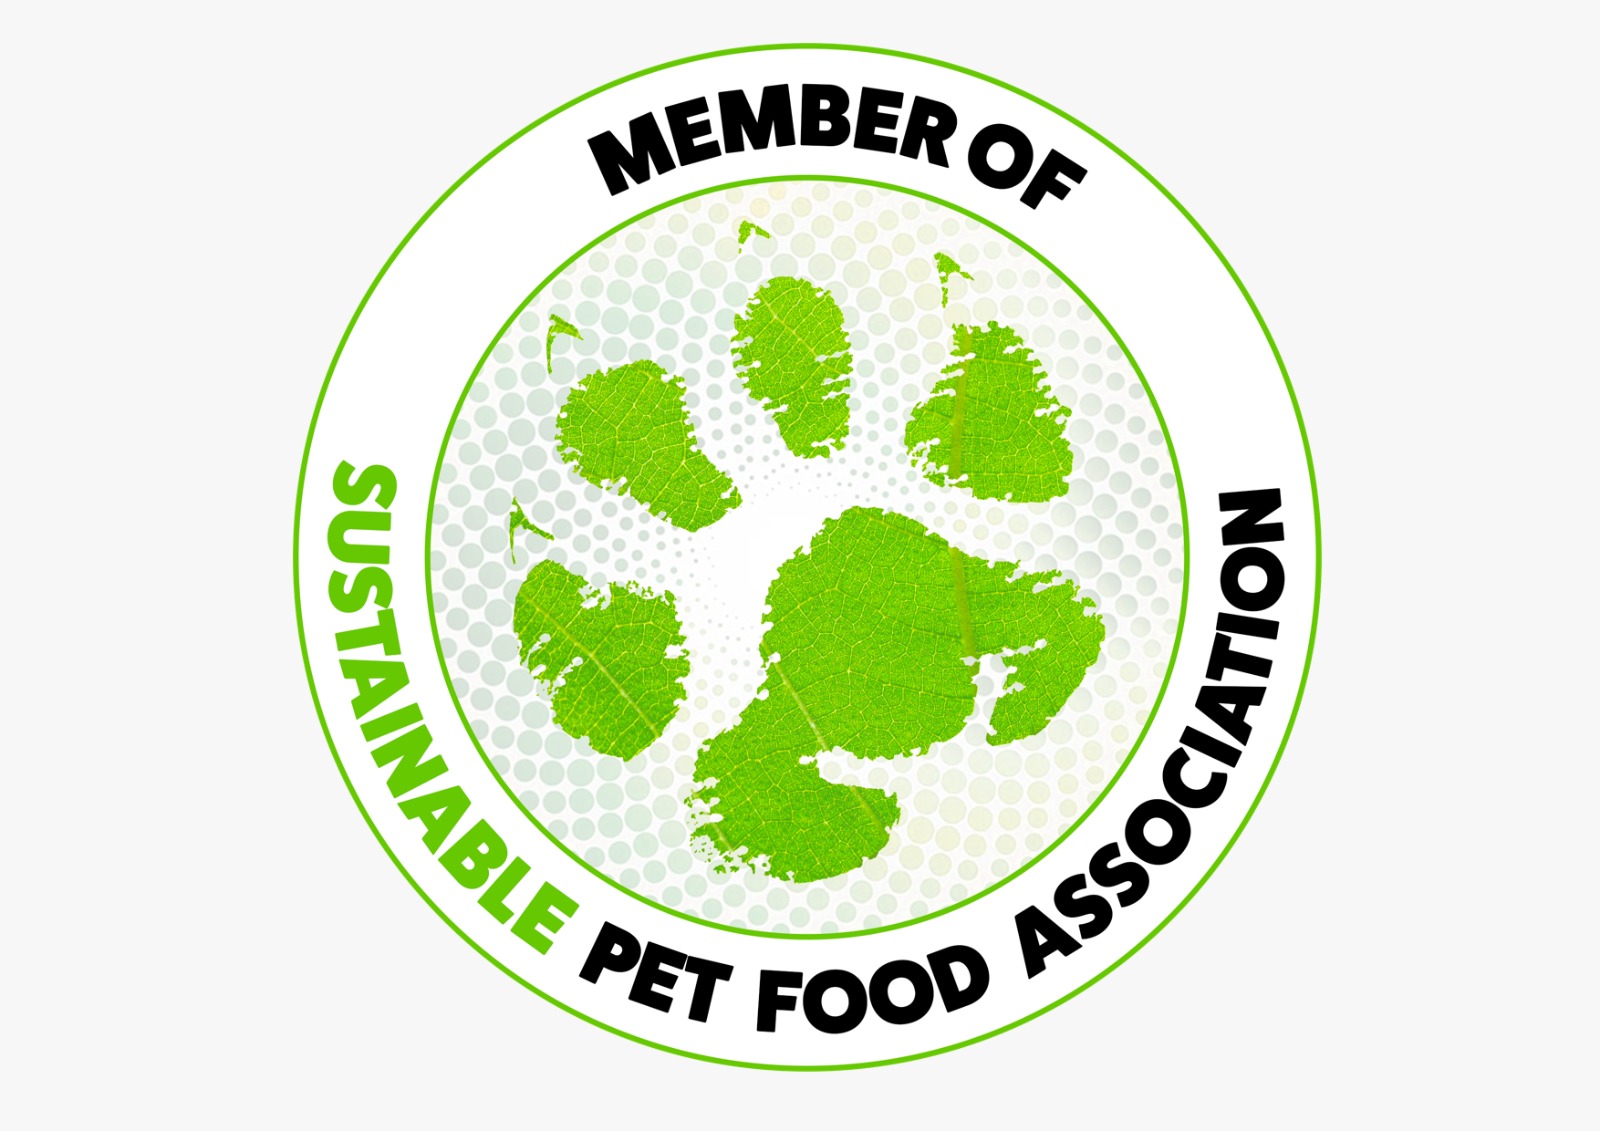 Sustainable Pet Food Association logo